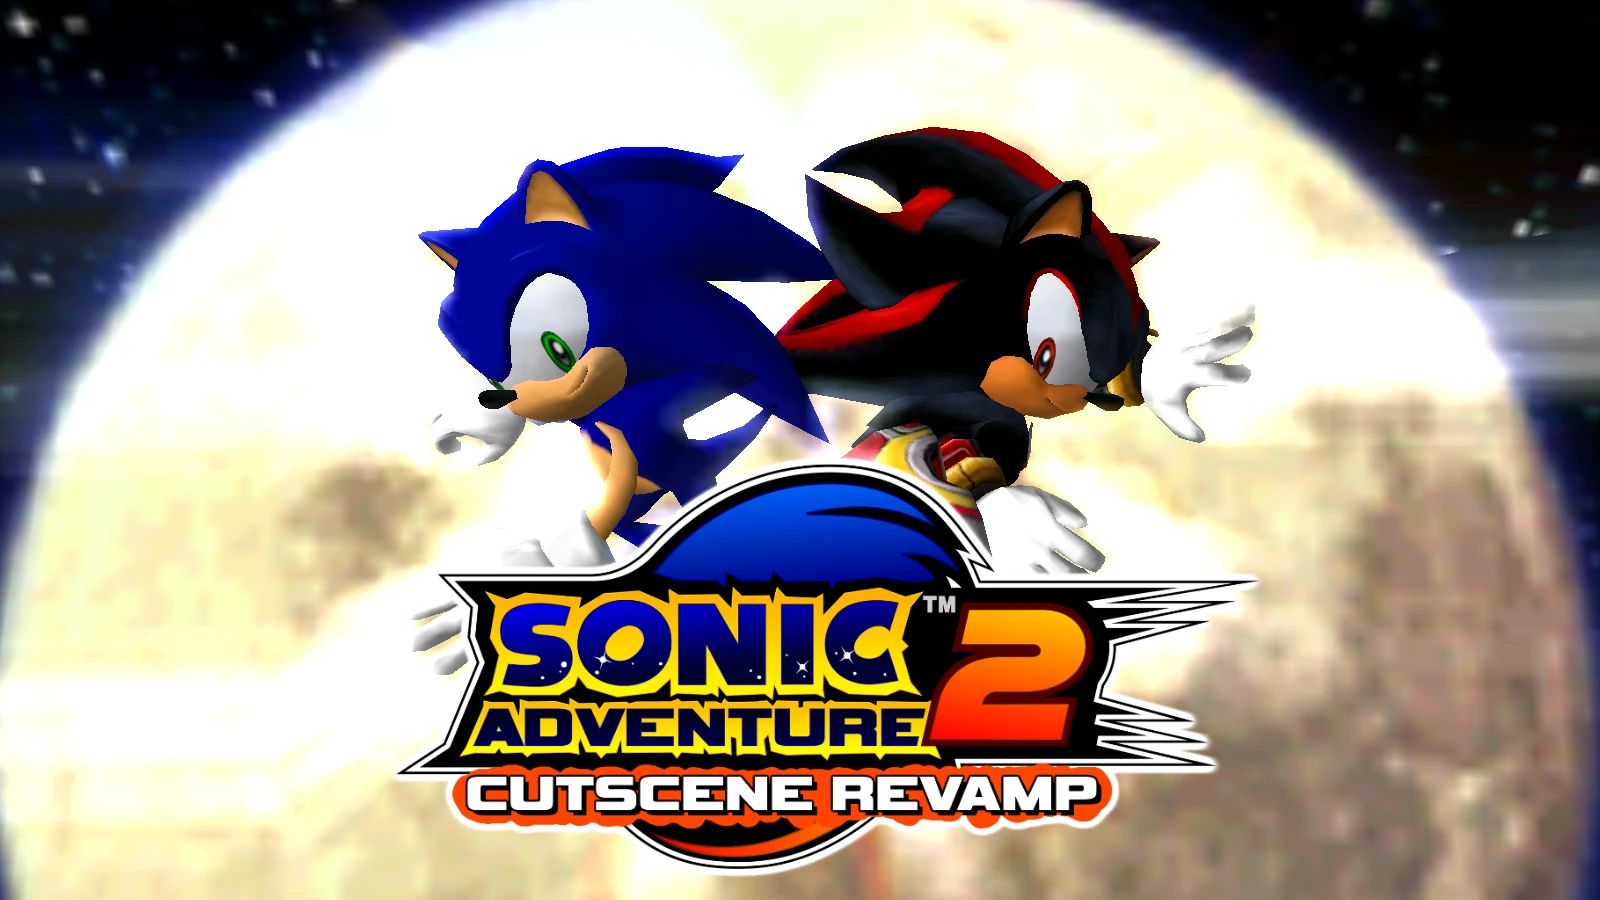 Cutscene Revamp Sonic Adventure 2 Mods - roblox how to make animated cutscenes